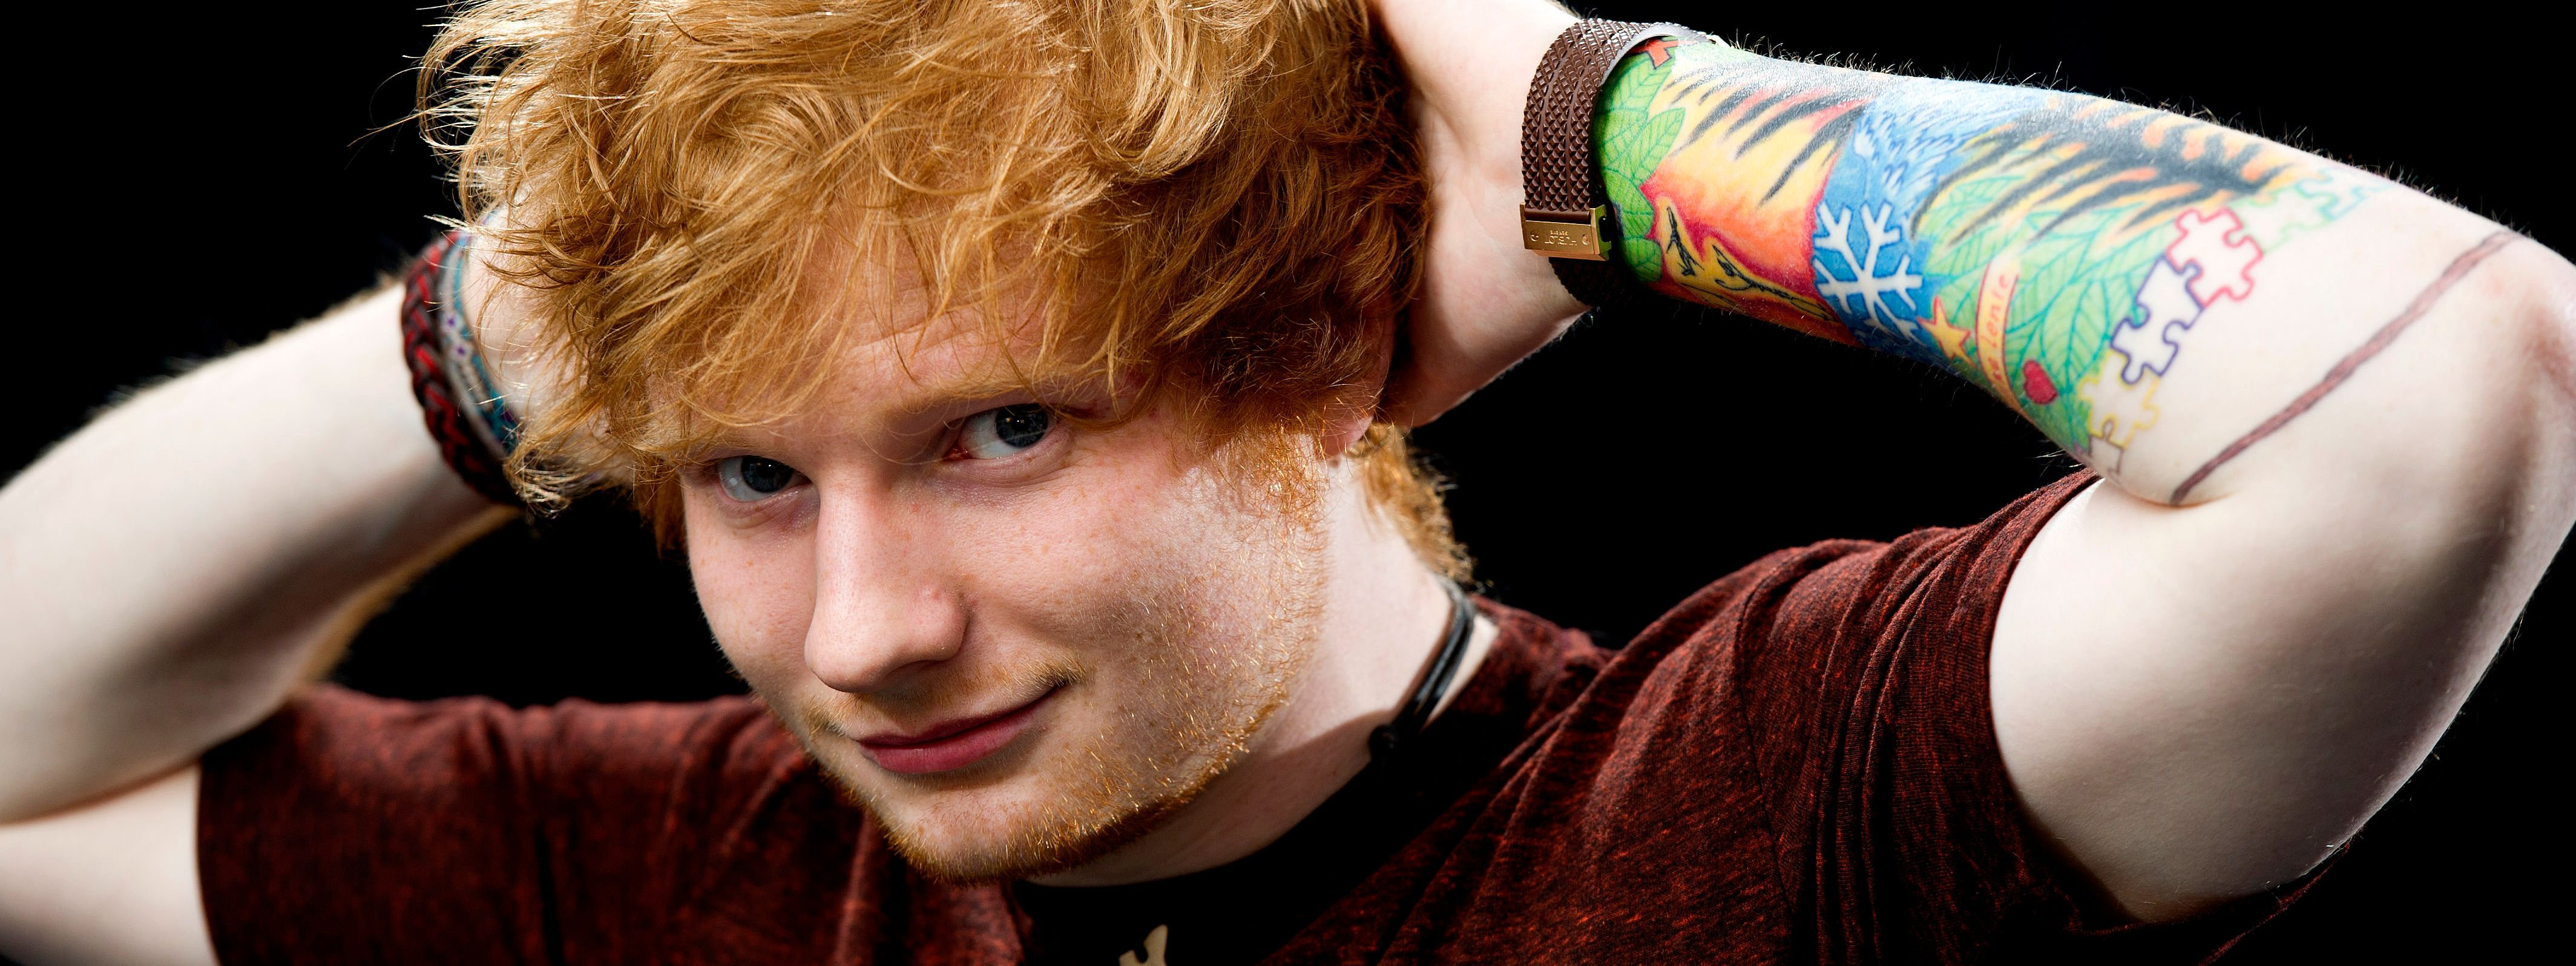 Download Ed Sheeran wallpapers for mobile phone free Ed Sheeran HD  pictures